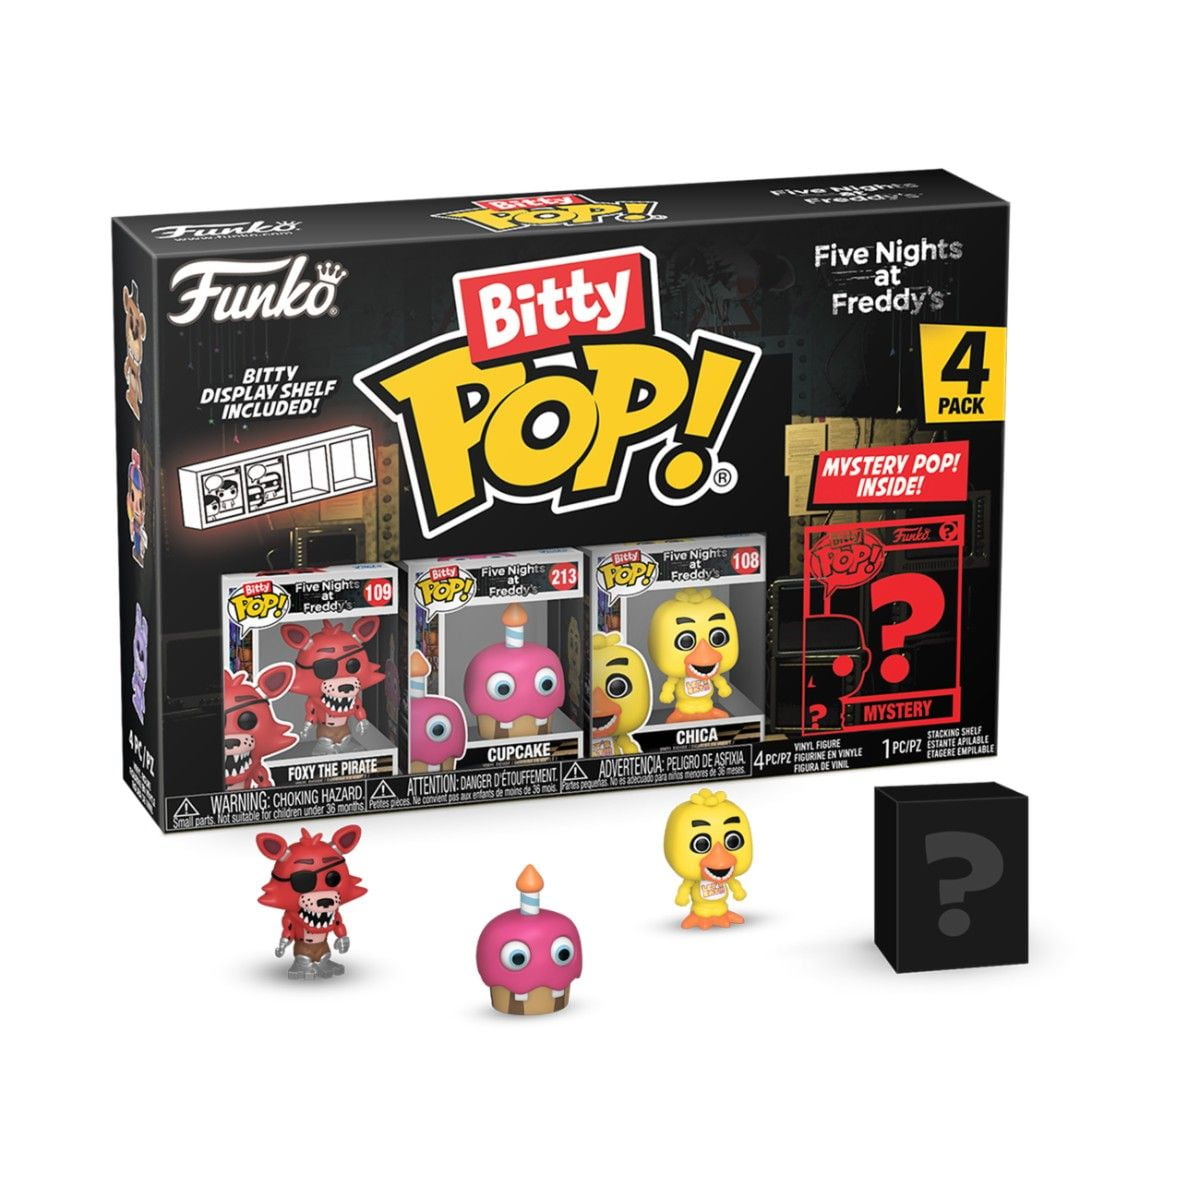 Foxy - Five Nights at Freddy's - Funko Bitty POP! (4 Pack)